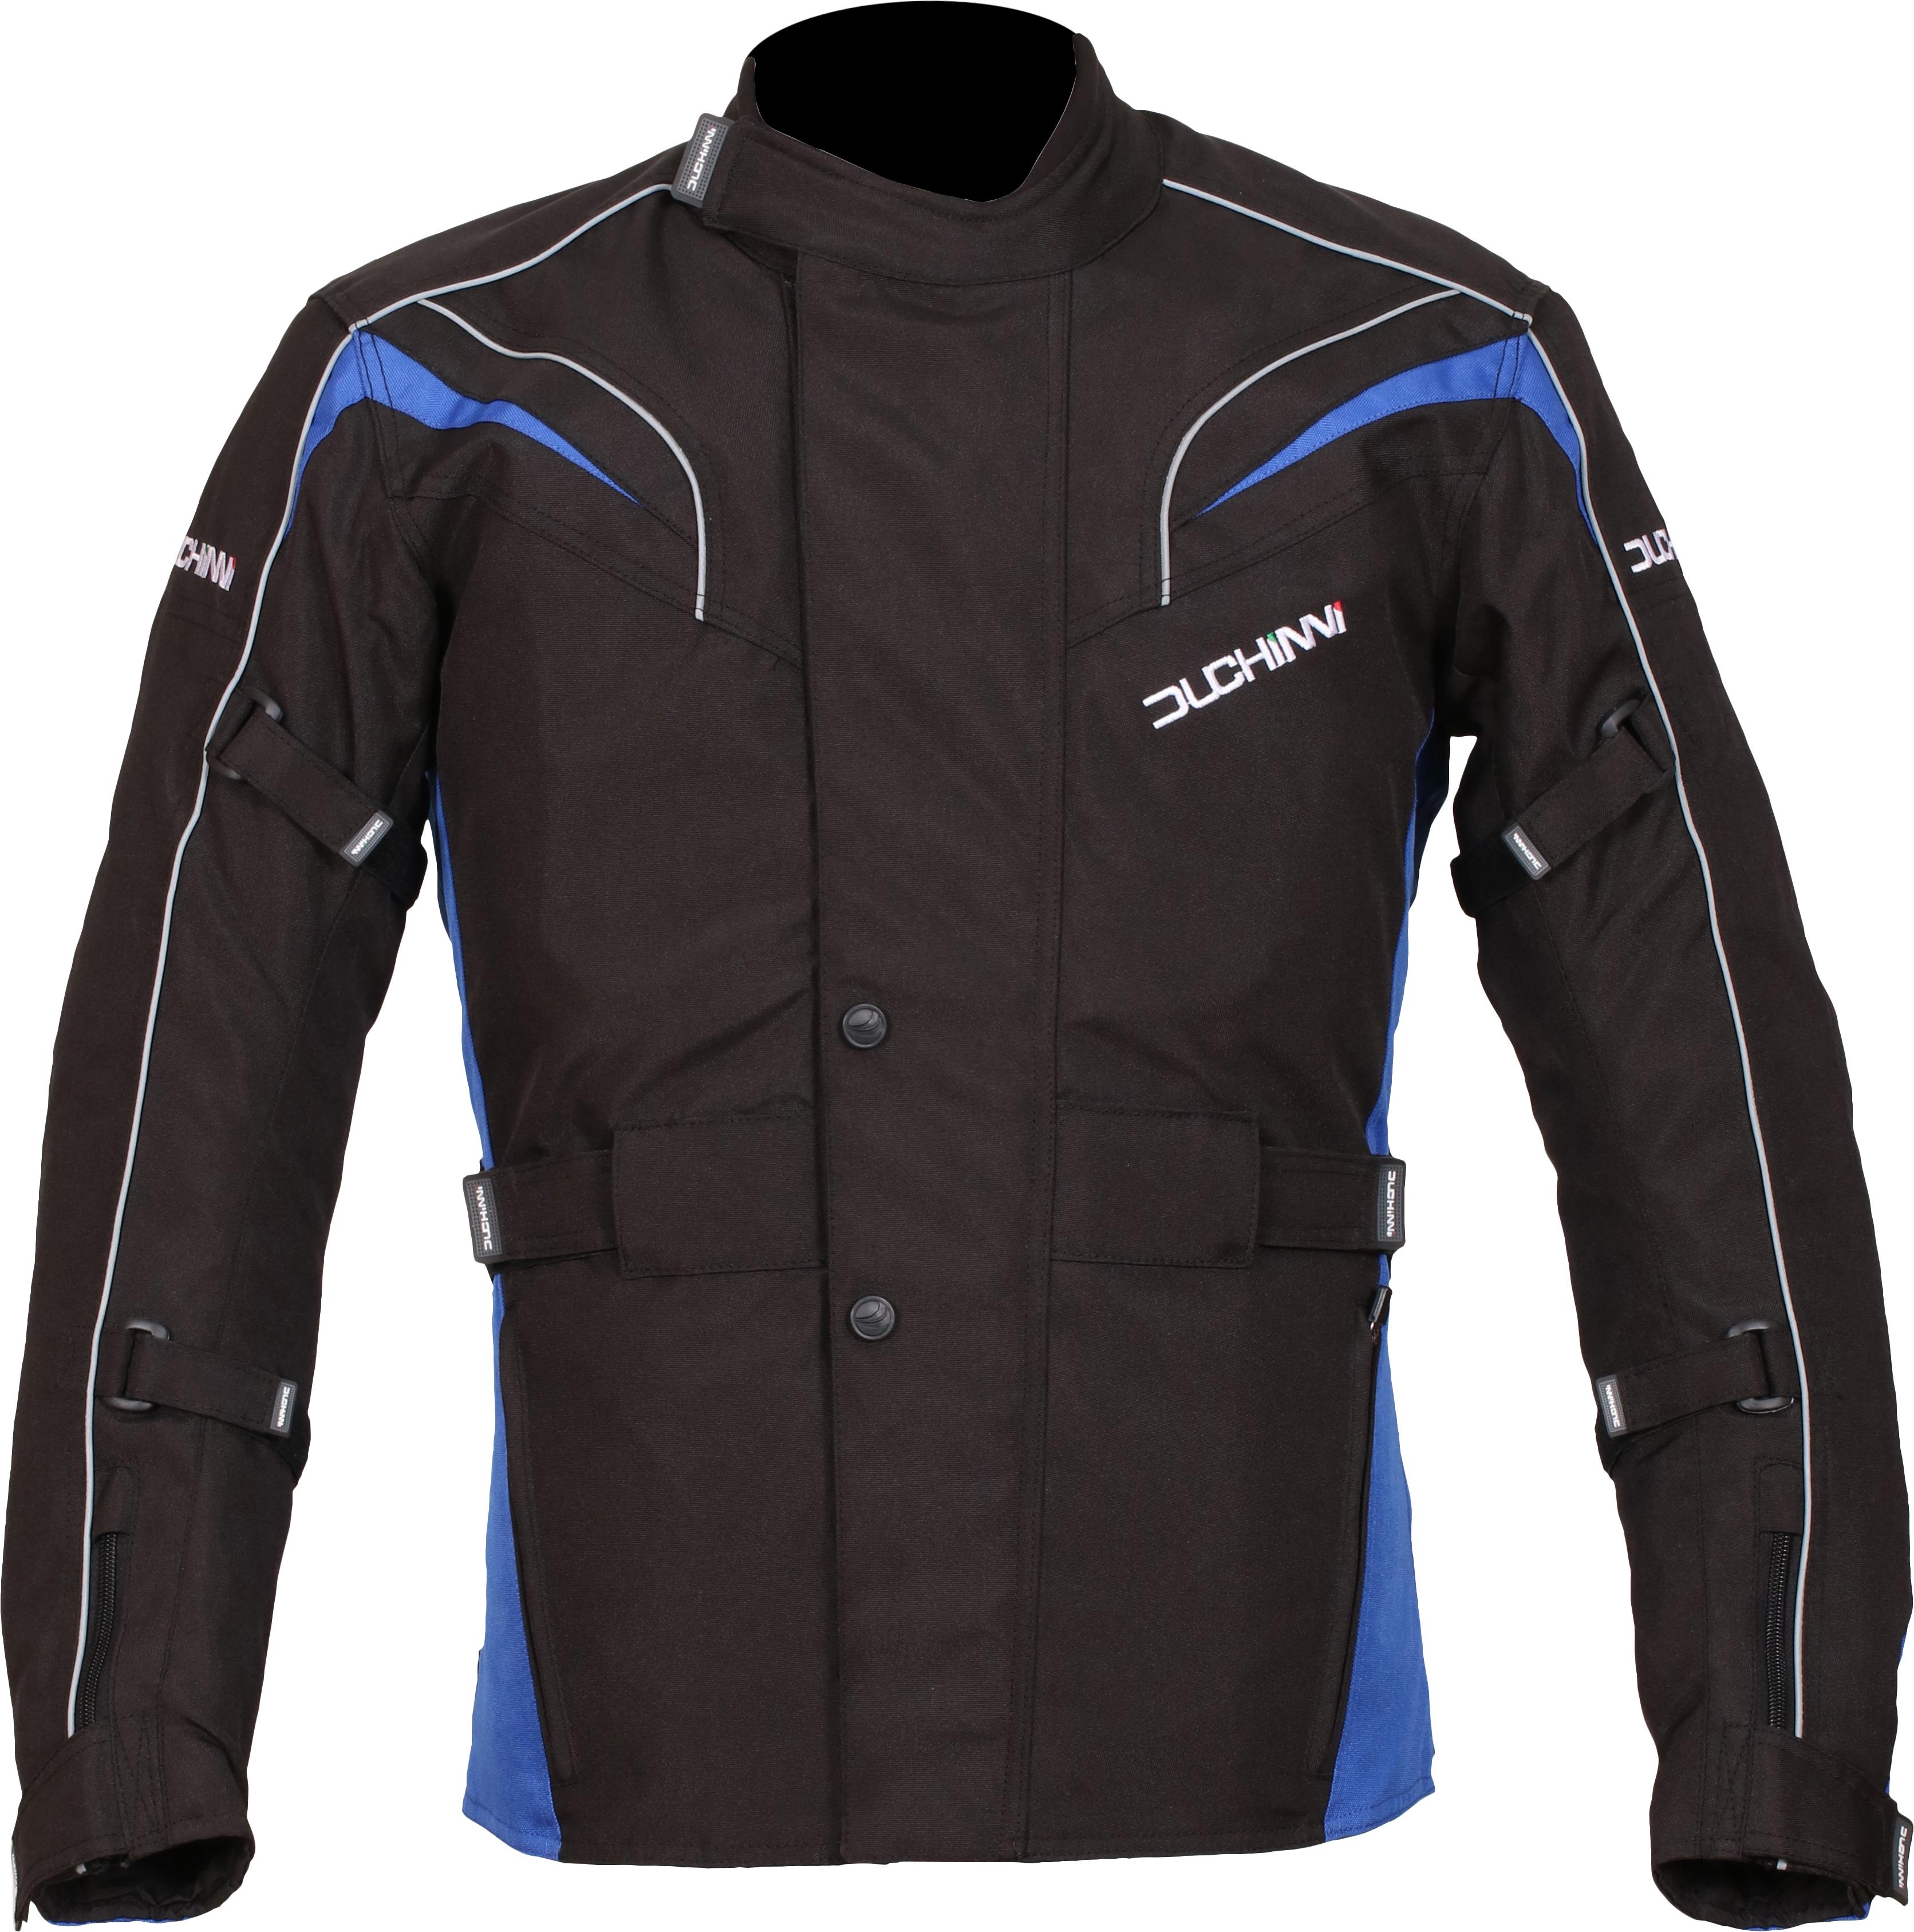 Duchinni Hurricane Motorcycle Jacket - Black And Blue, 3Xl